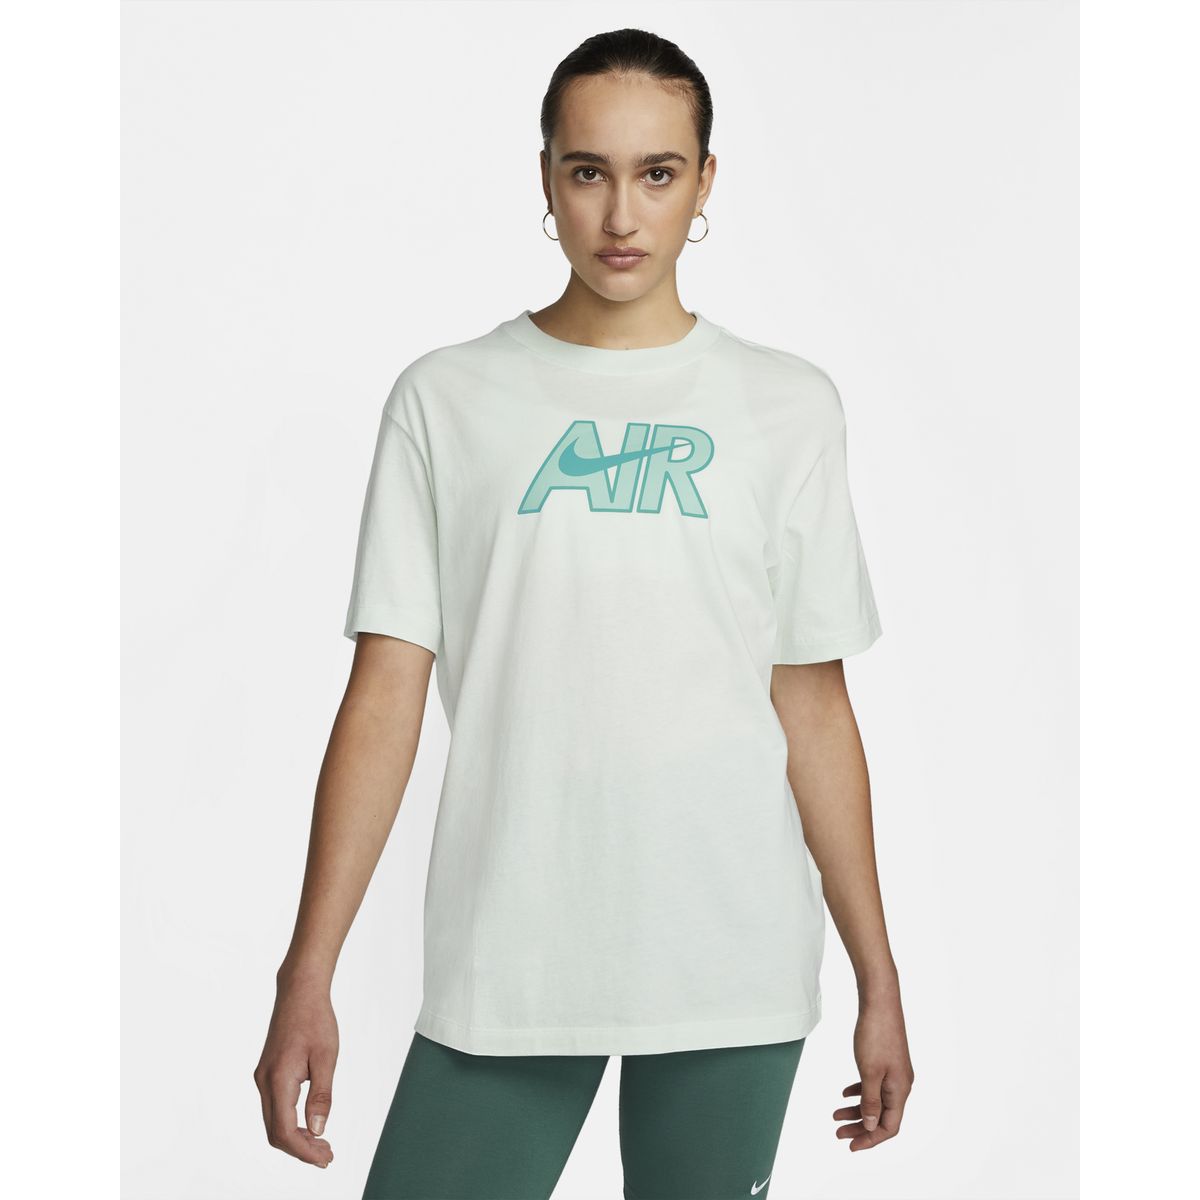 Nike Sportswear Damen T-Shirt